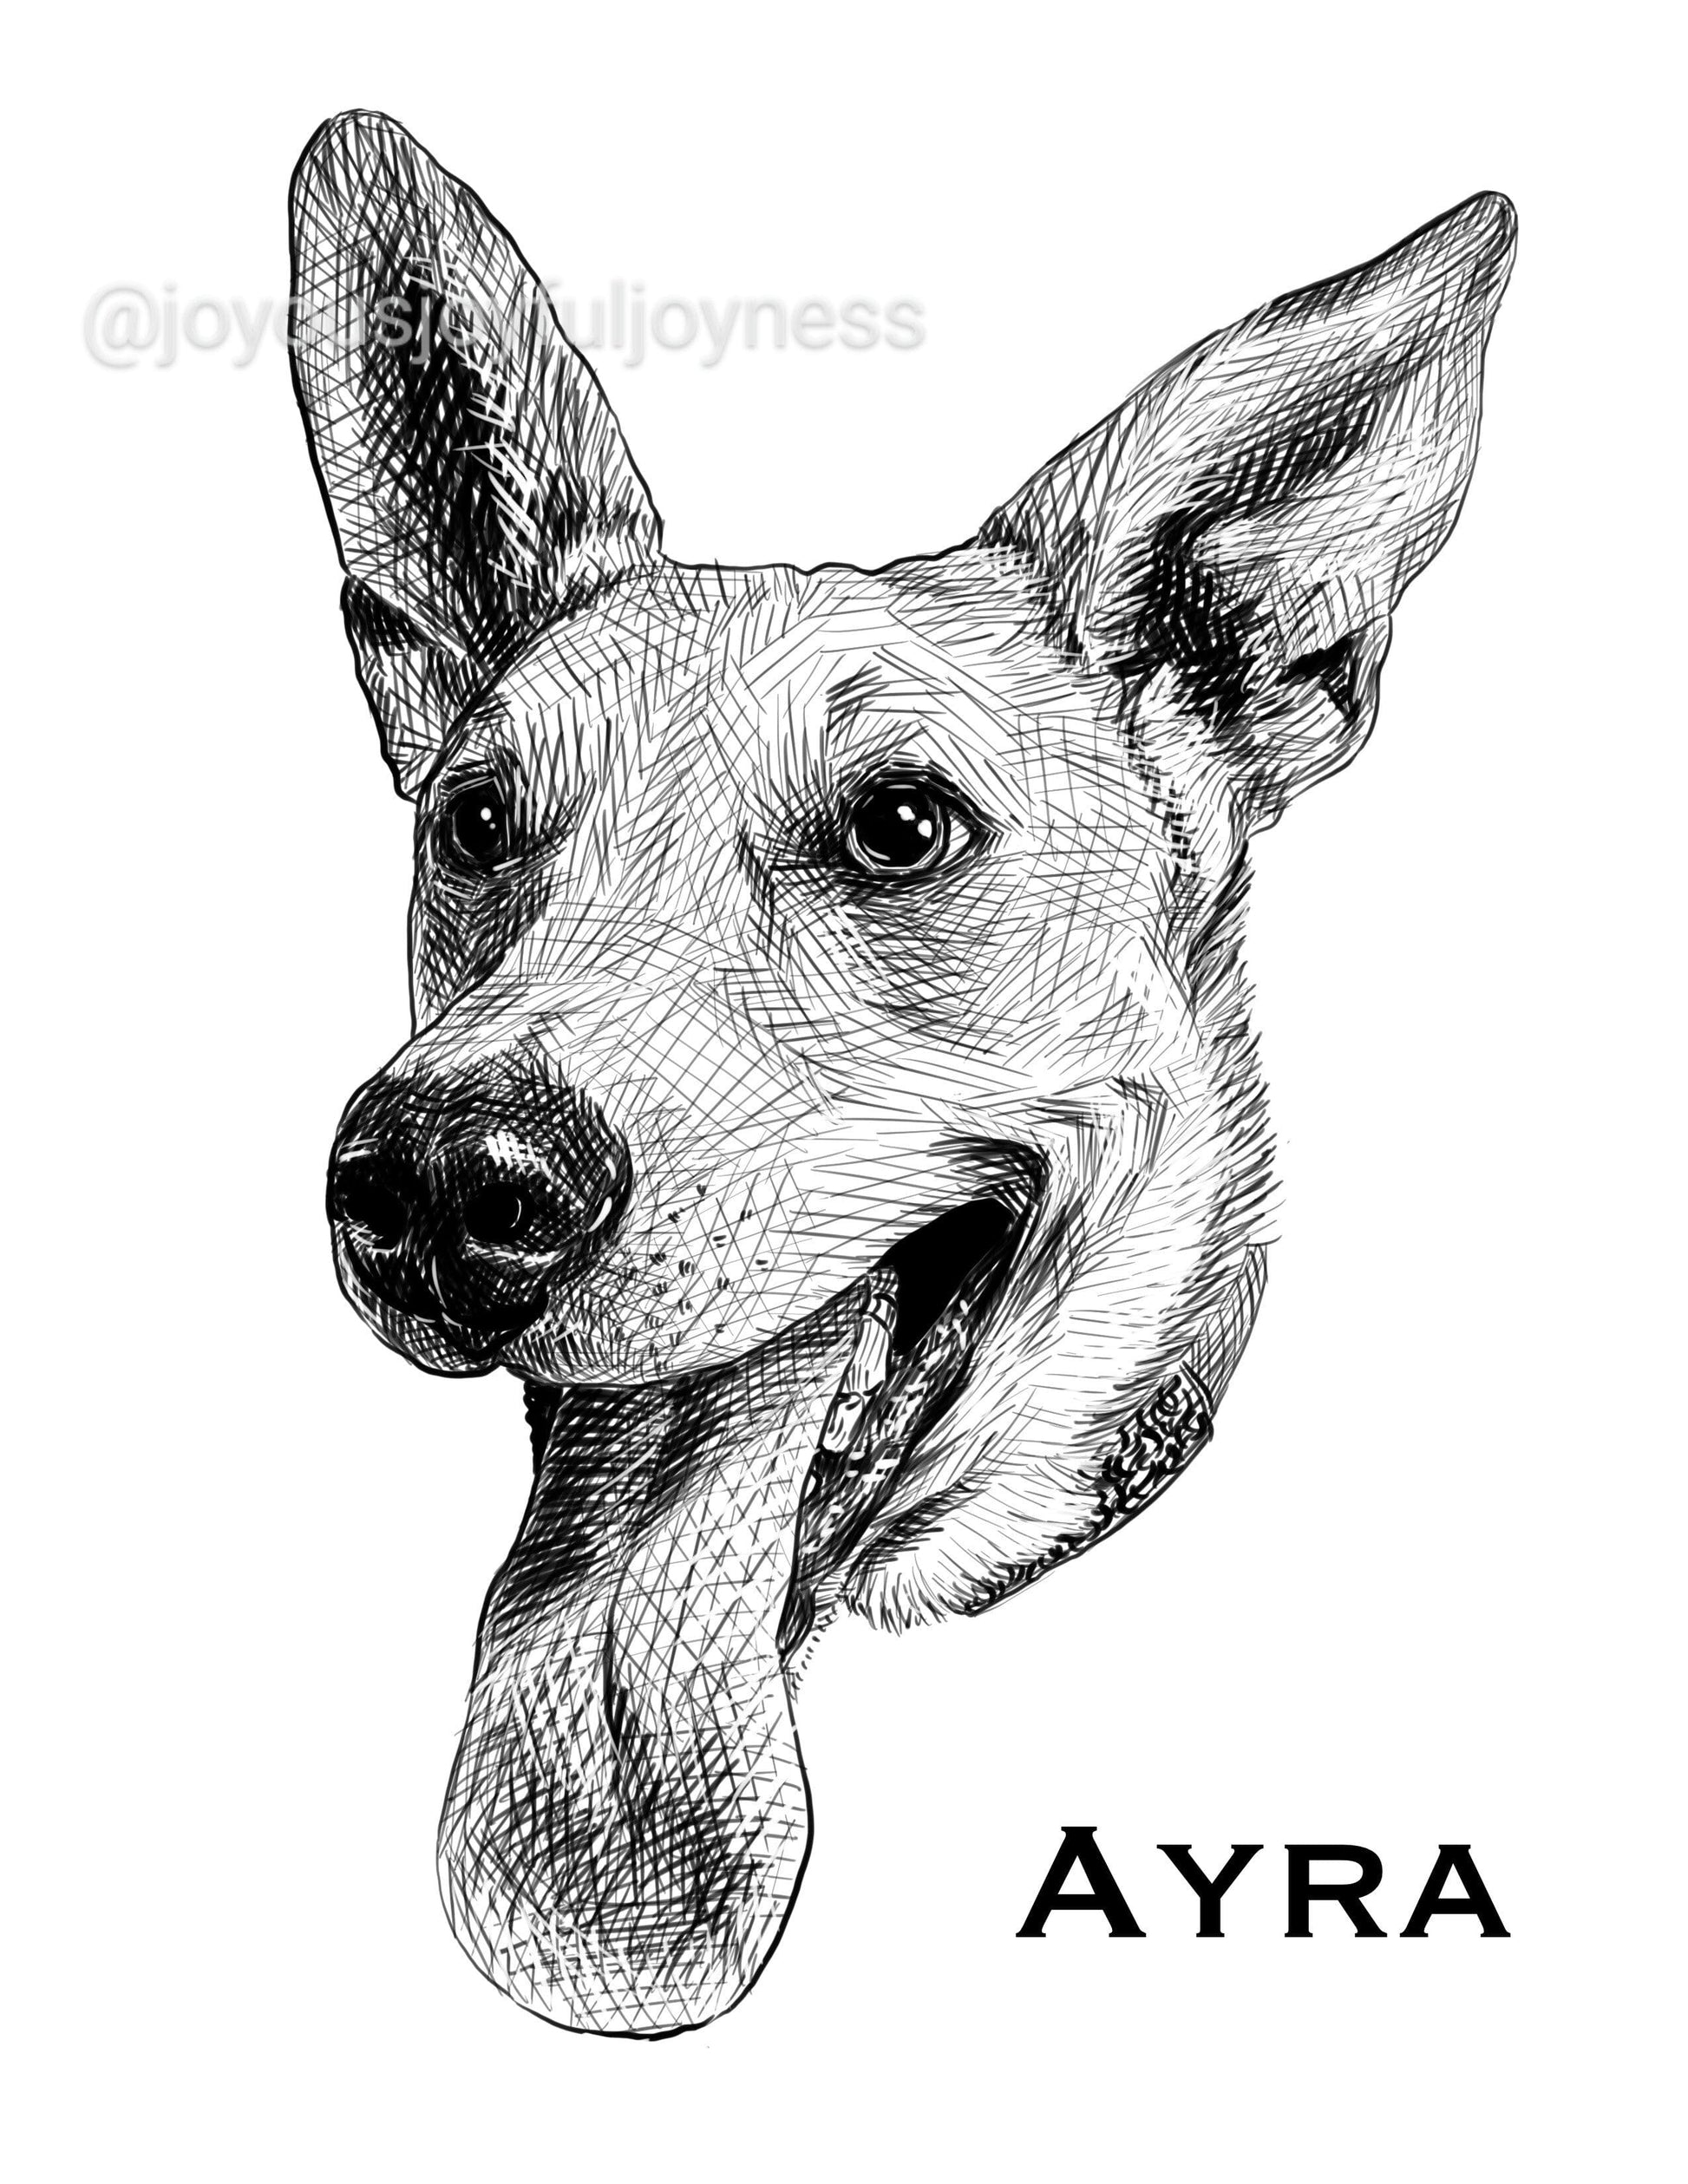 Portfolio: Ayra (Not for sale) Posters, Prints, & Visual Artwork JoyousJoyfulJoyness 